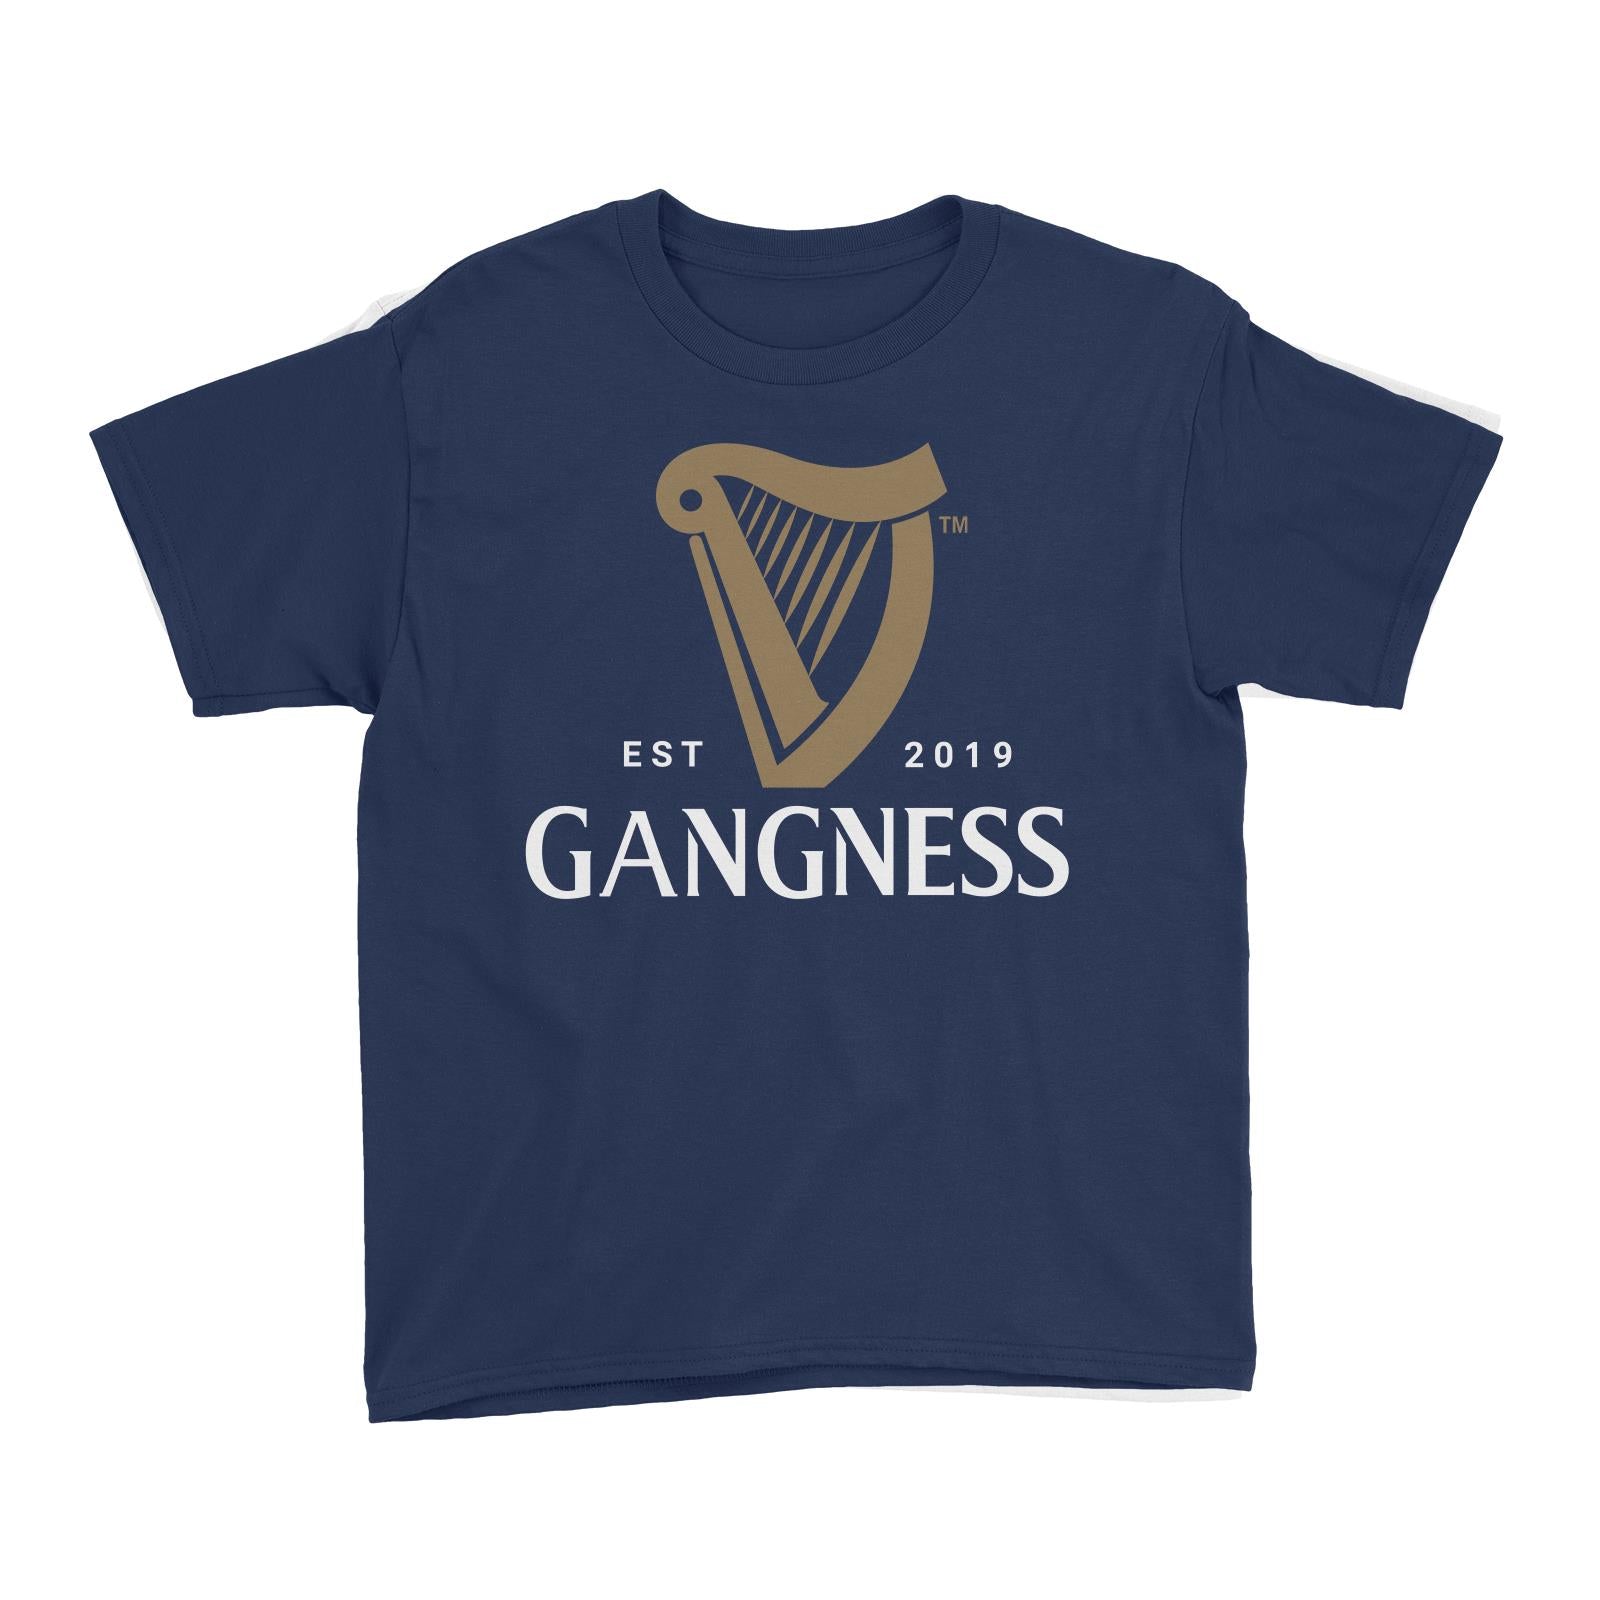 Slang Statement Gangness Kid's T-Shirt